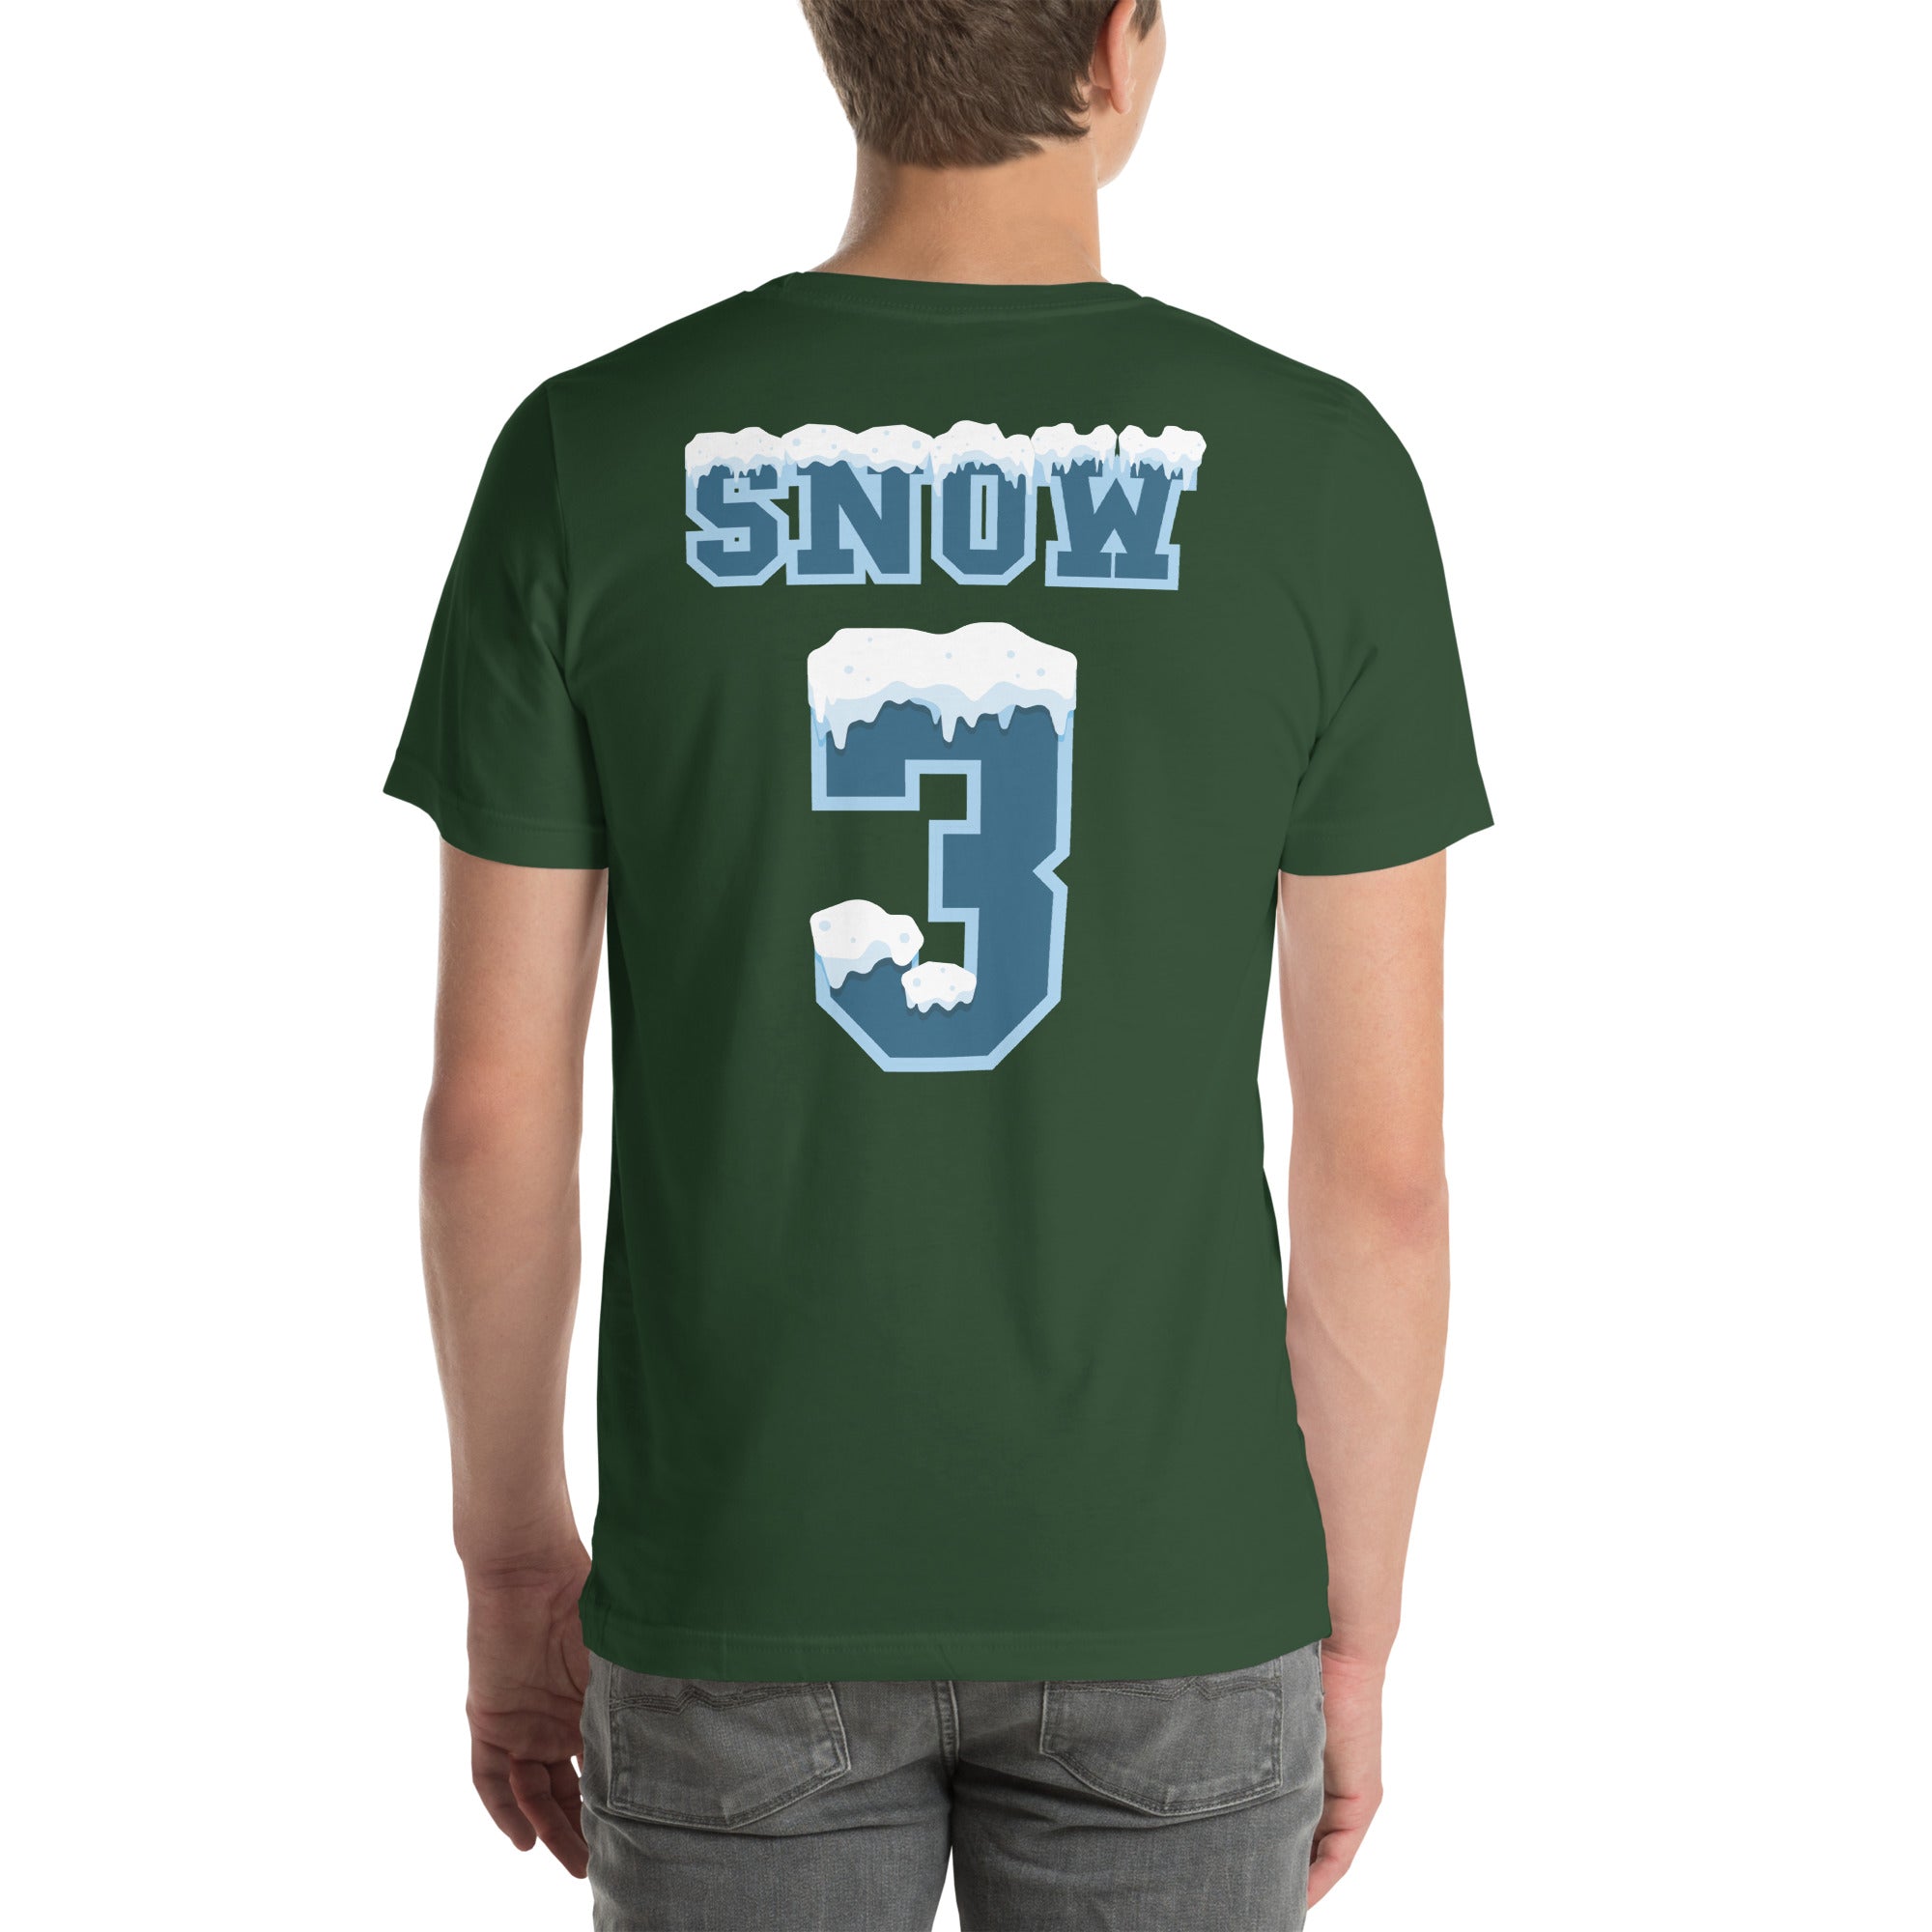 #3 Eric Snow - Snowman - Unisex t-shirt